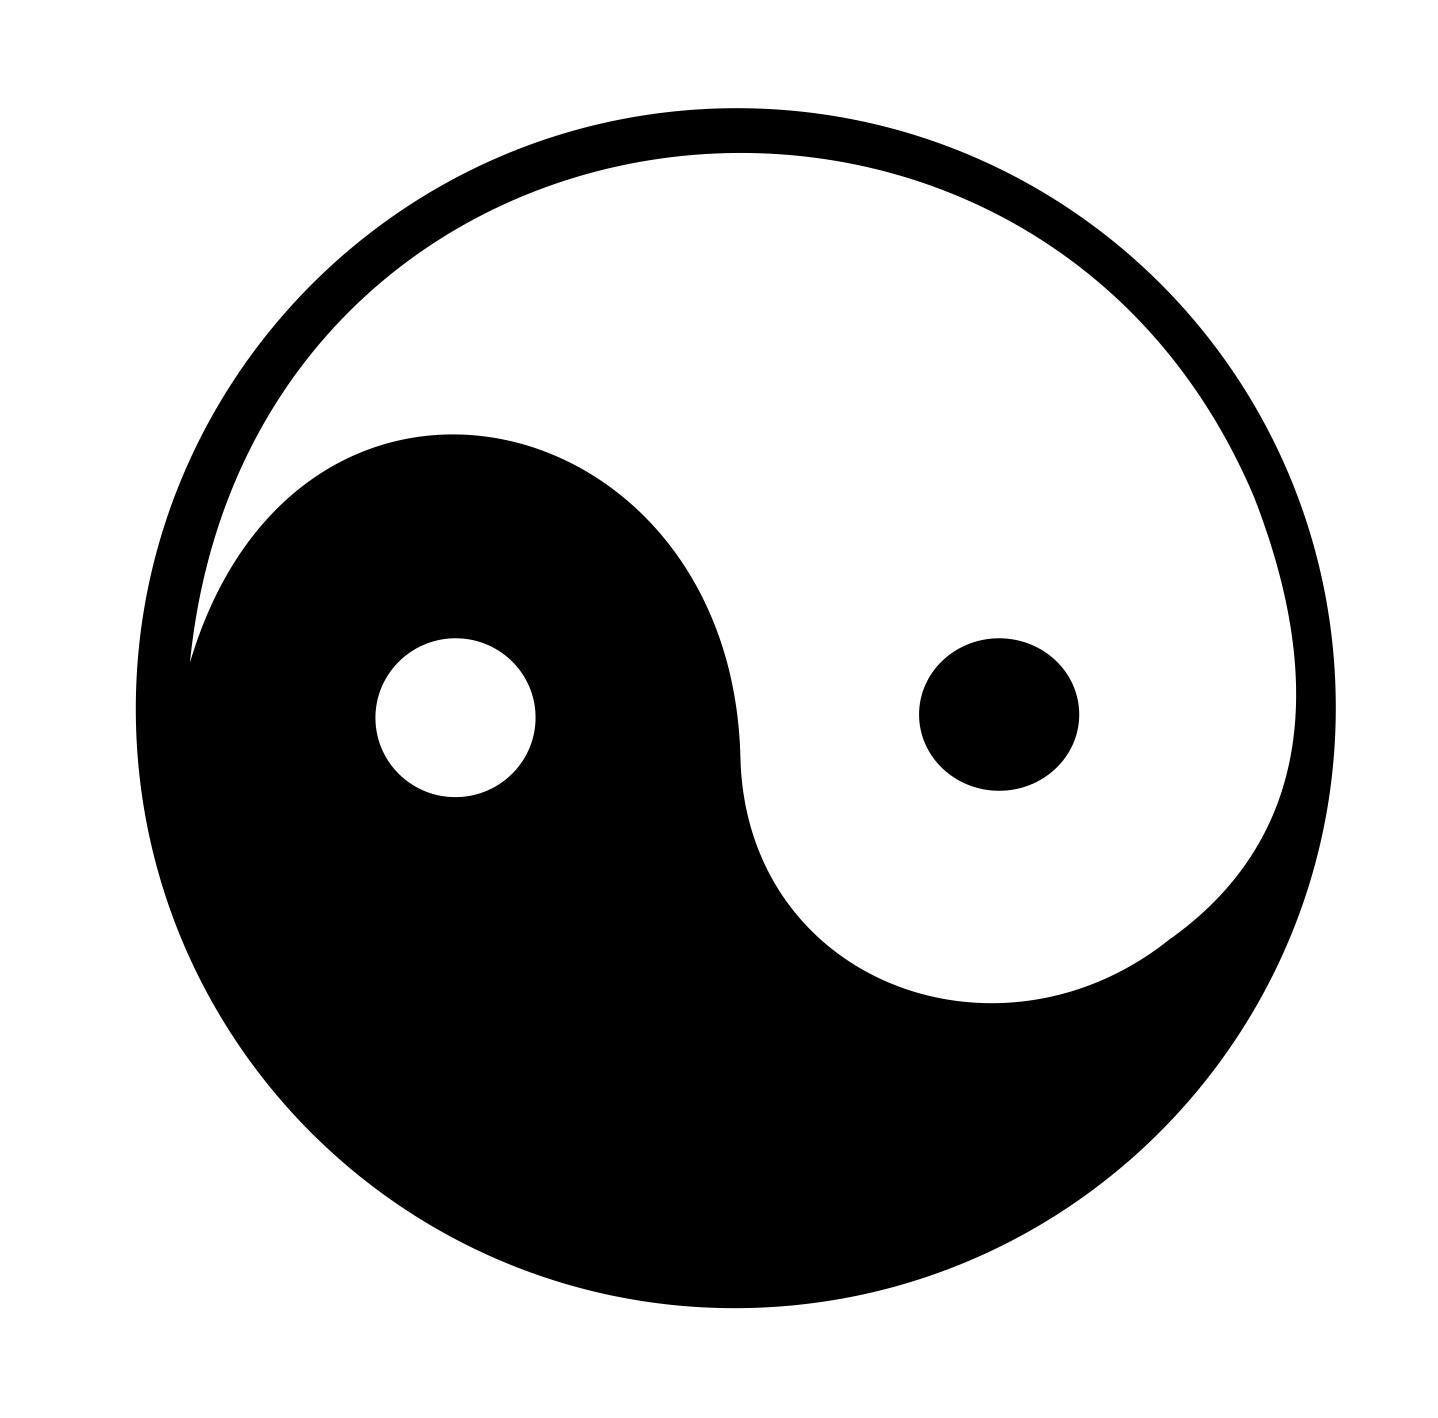 Yin Yang Black and White Box Logo - Amazon.com: 3 - Ying Yang Chinese Symbols White Helmet Sticker Decal ...